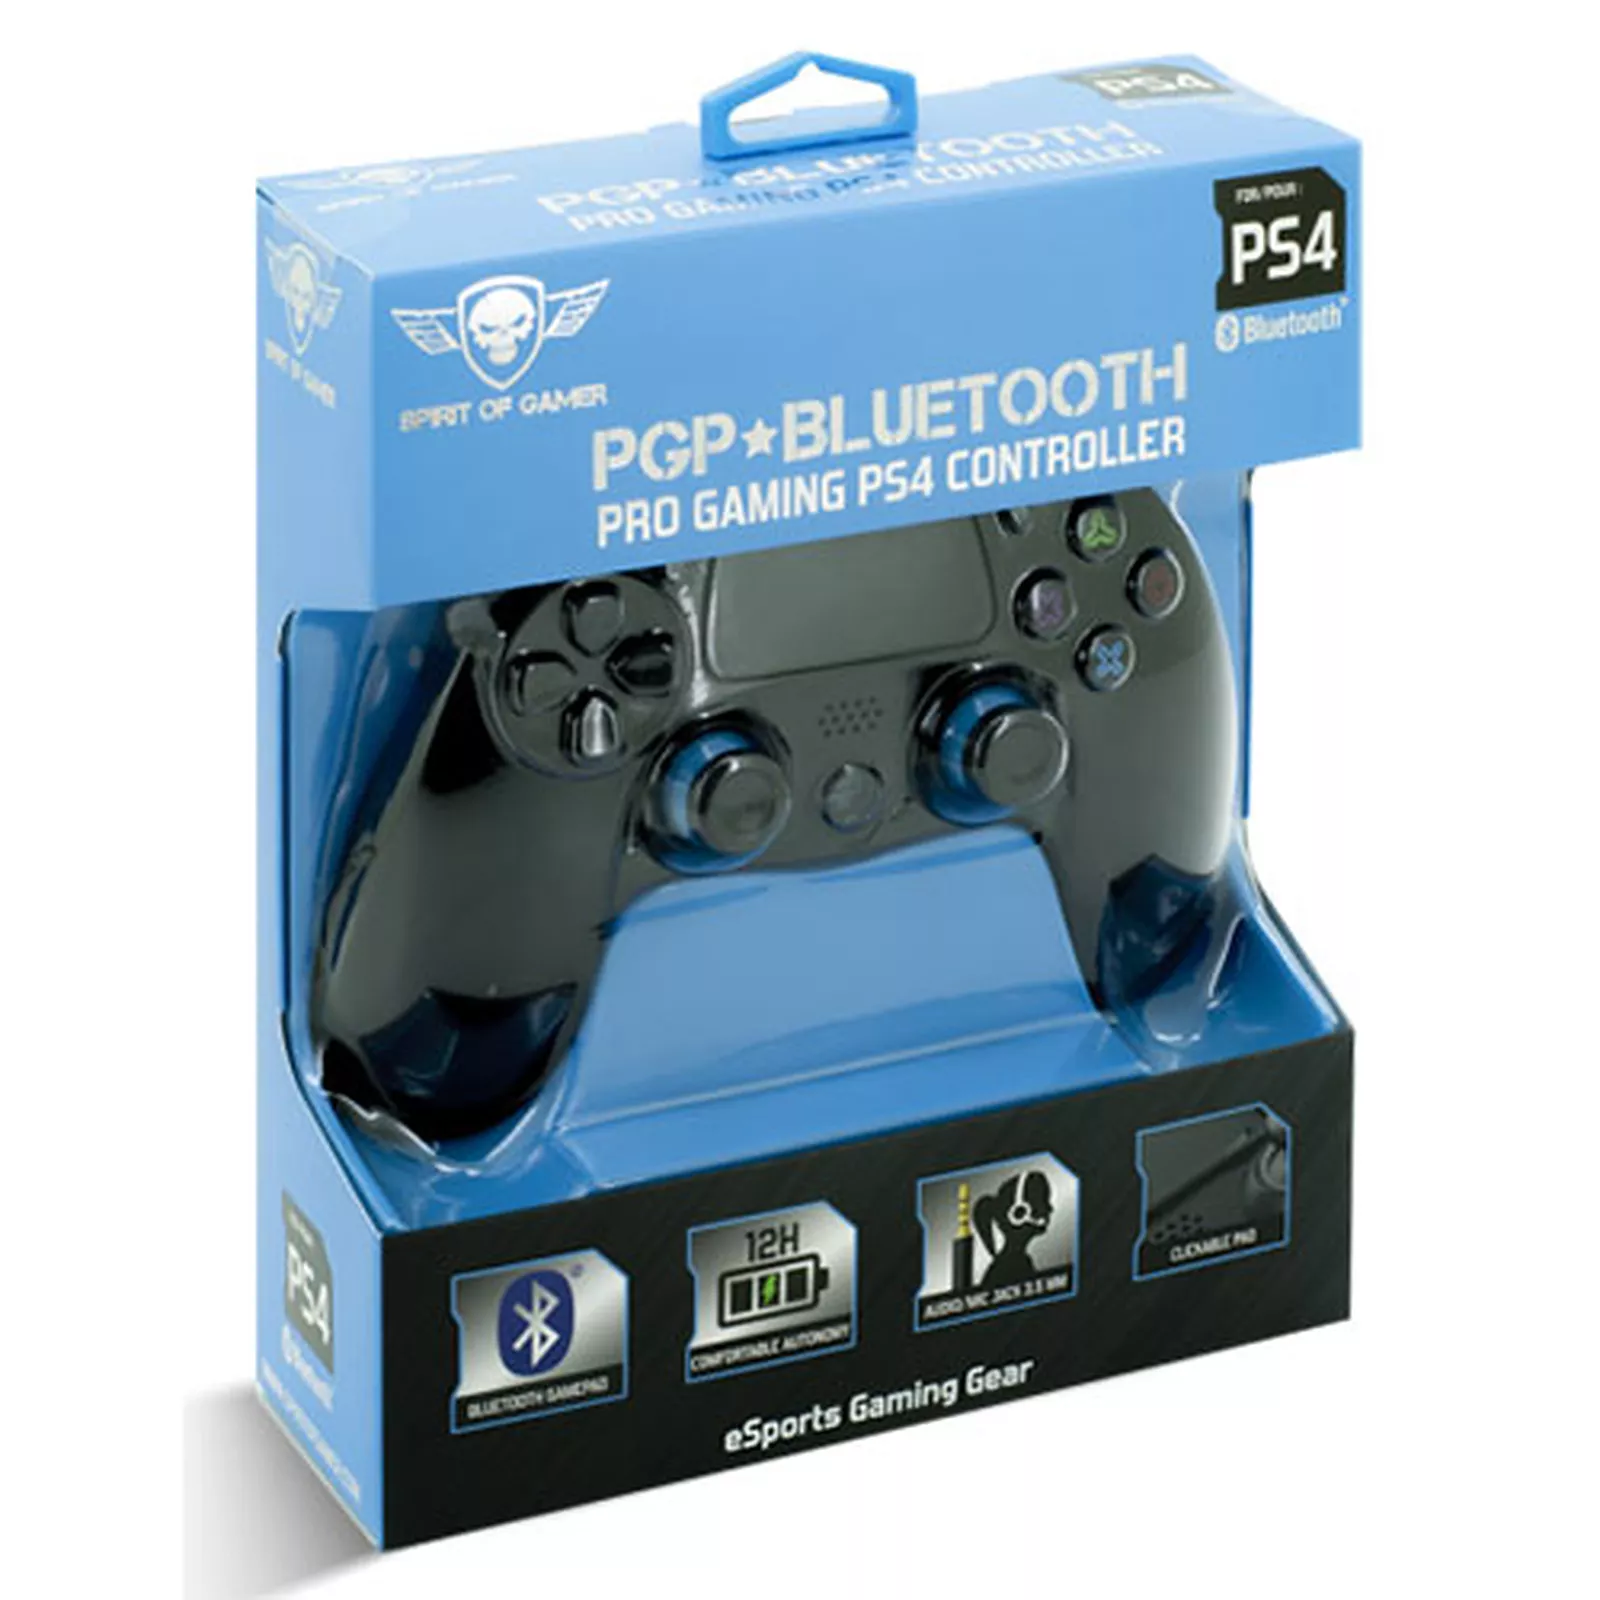 Spirit of Gamer Pro Gaming PS4 Controller (PS4)